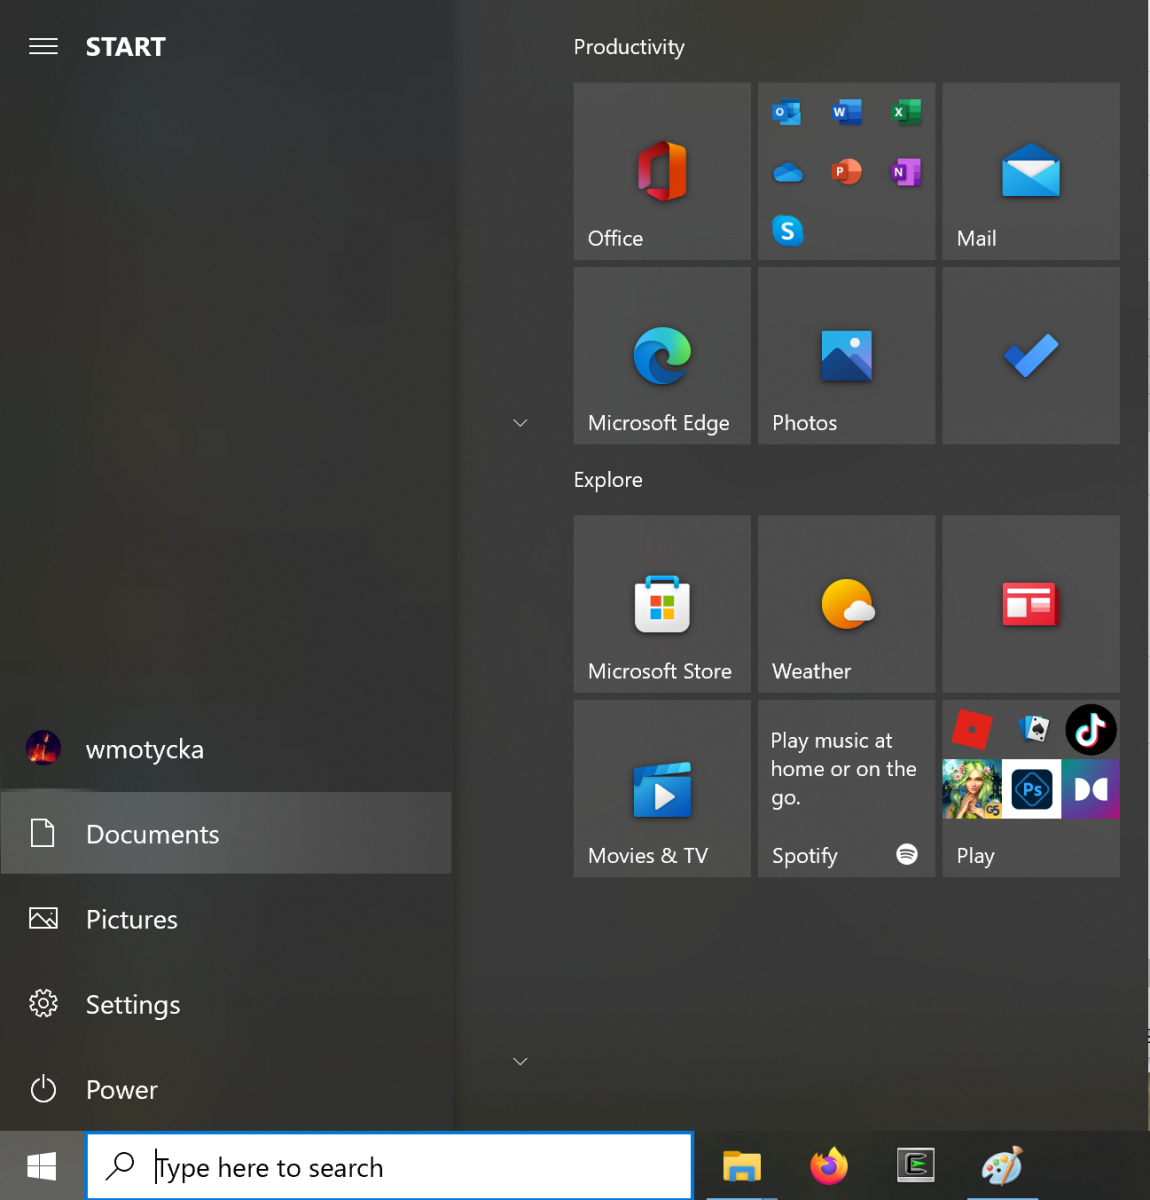 Start menu view of Windows 10